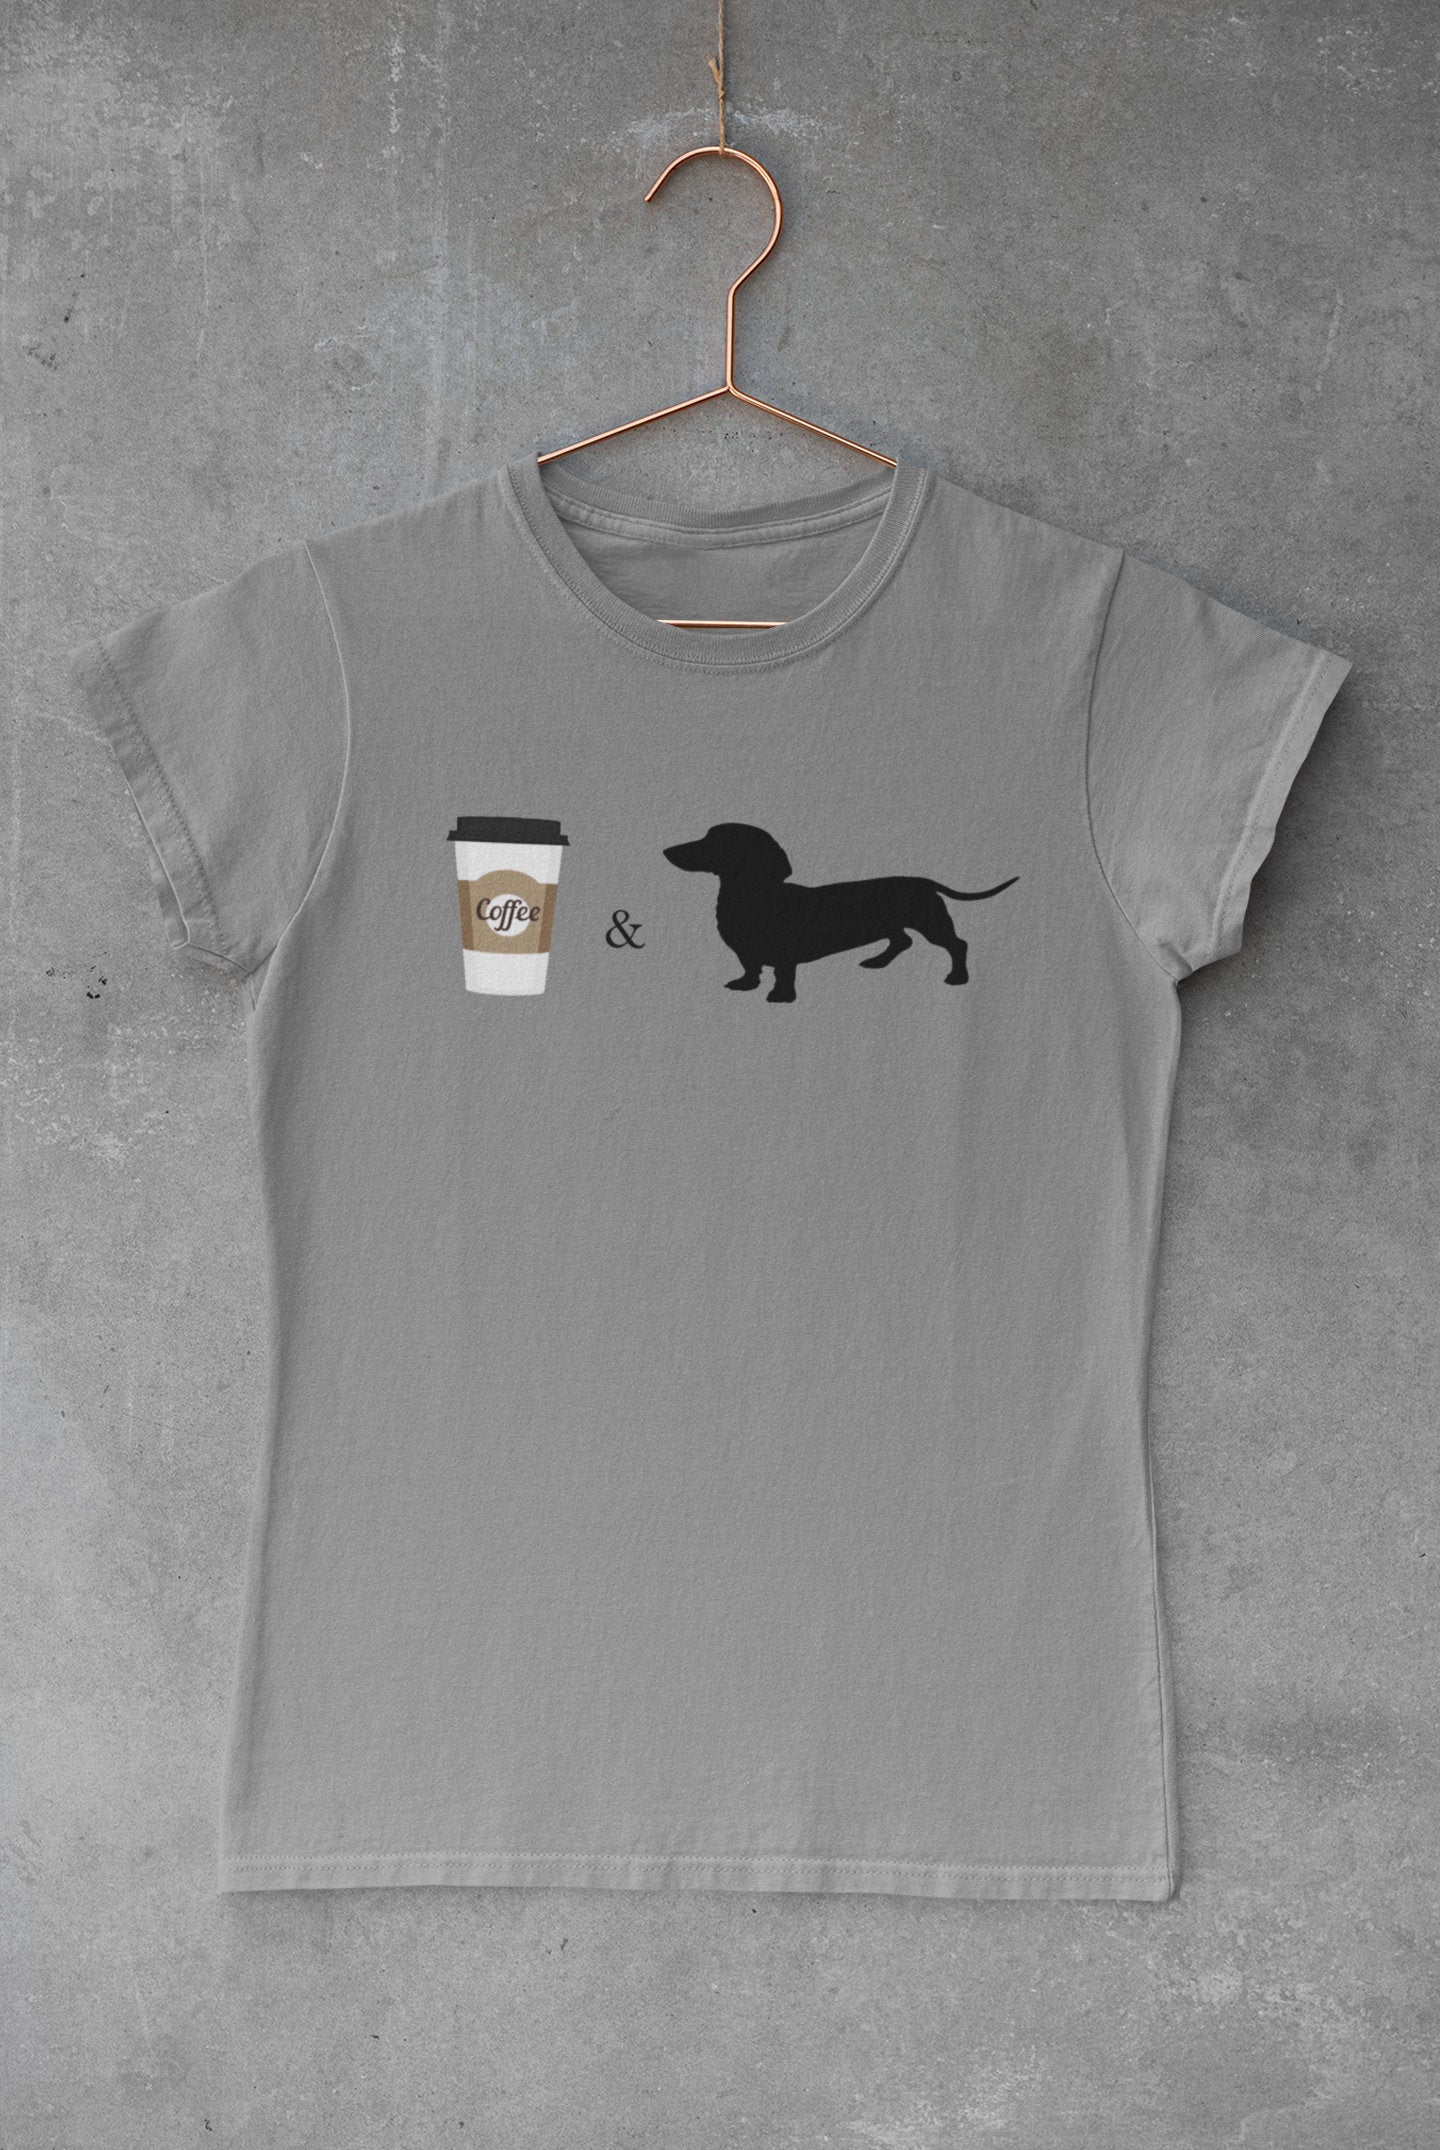 Emergency Print House Coffee & Dachshund Shirt